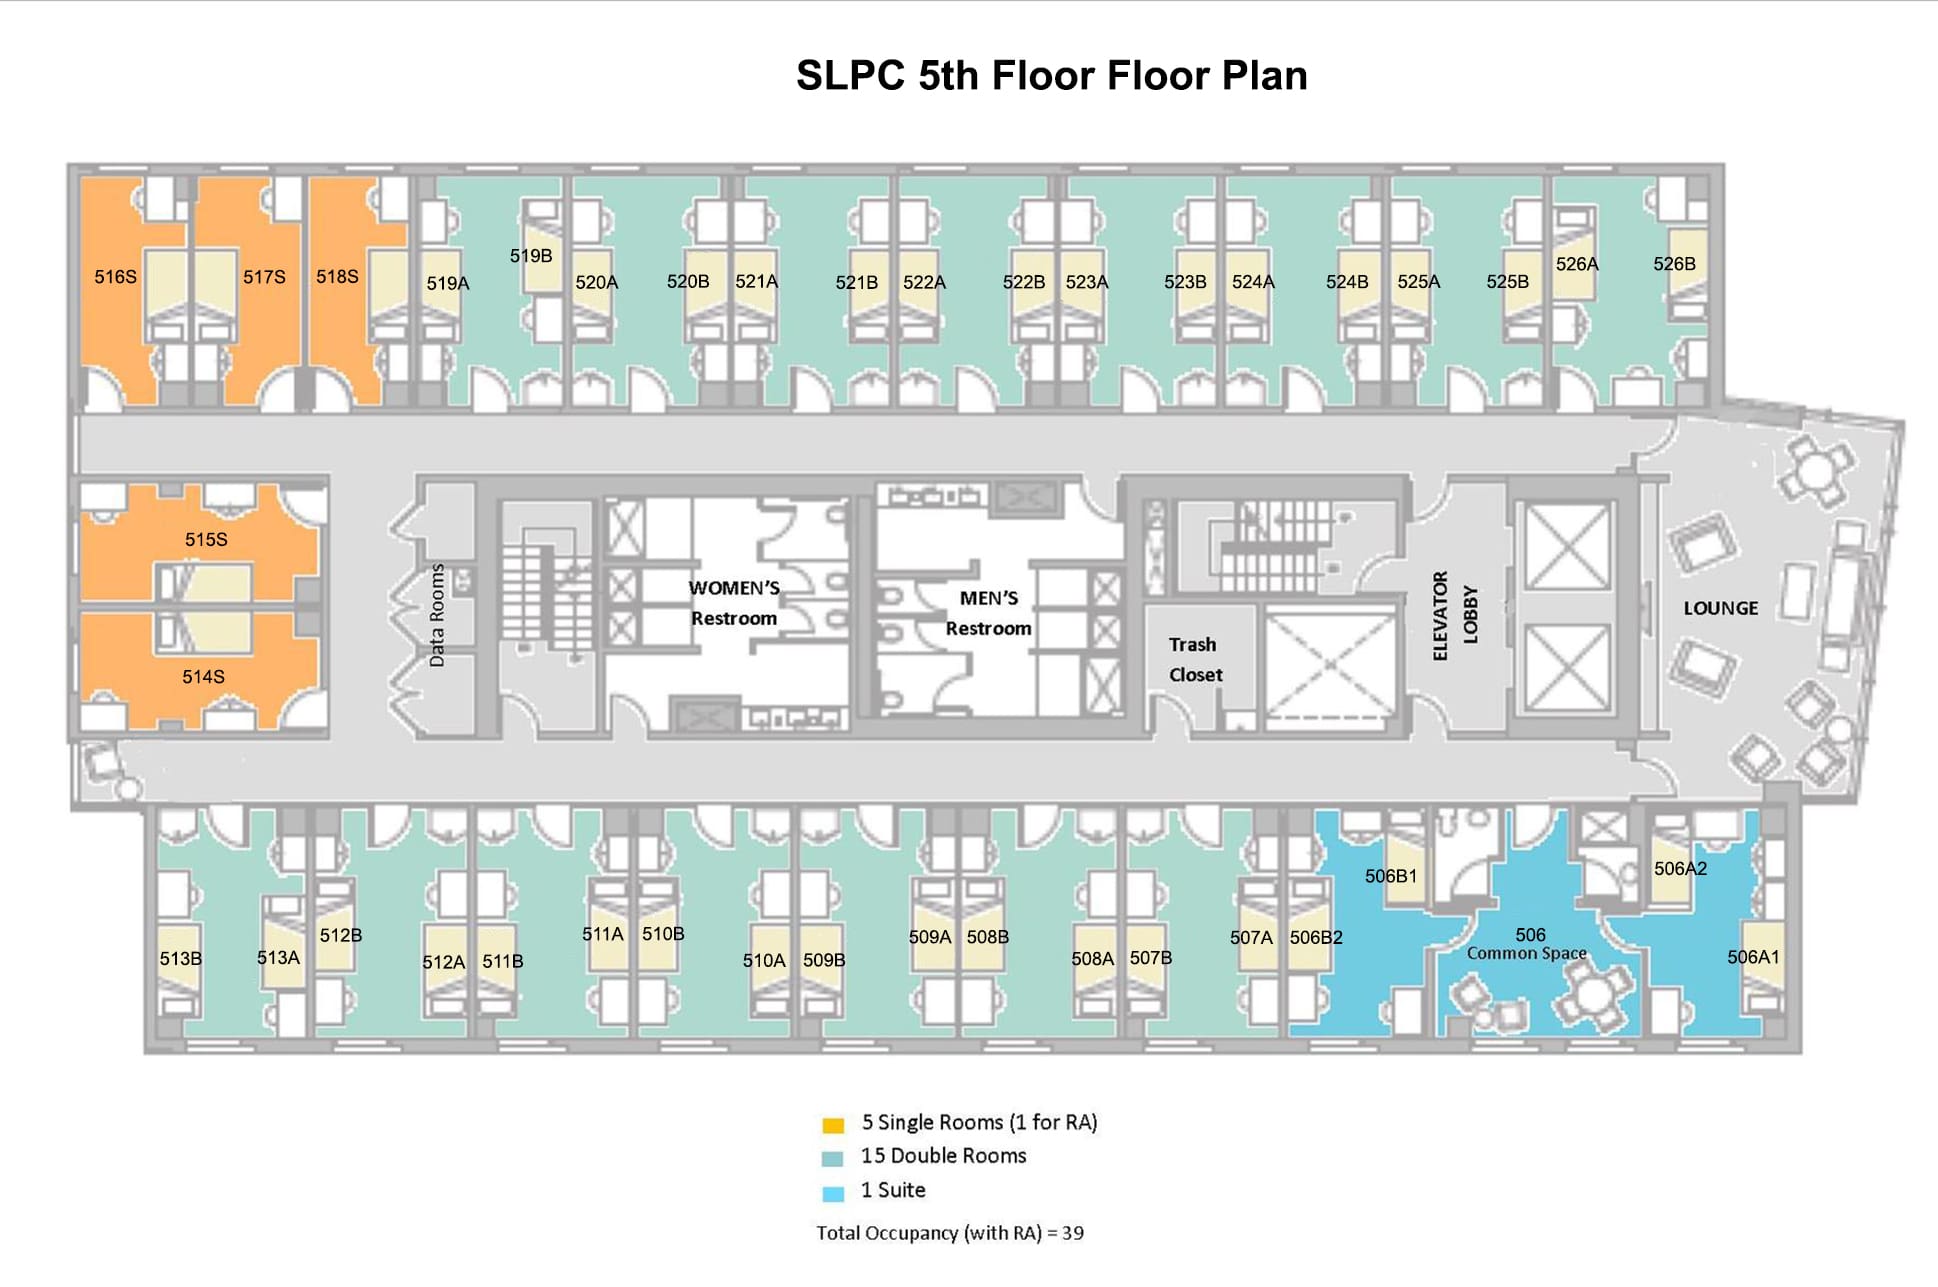 Floor plan diagram of floors 5 through 10 in the NEC residence hall.